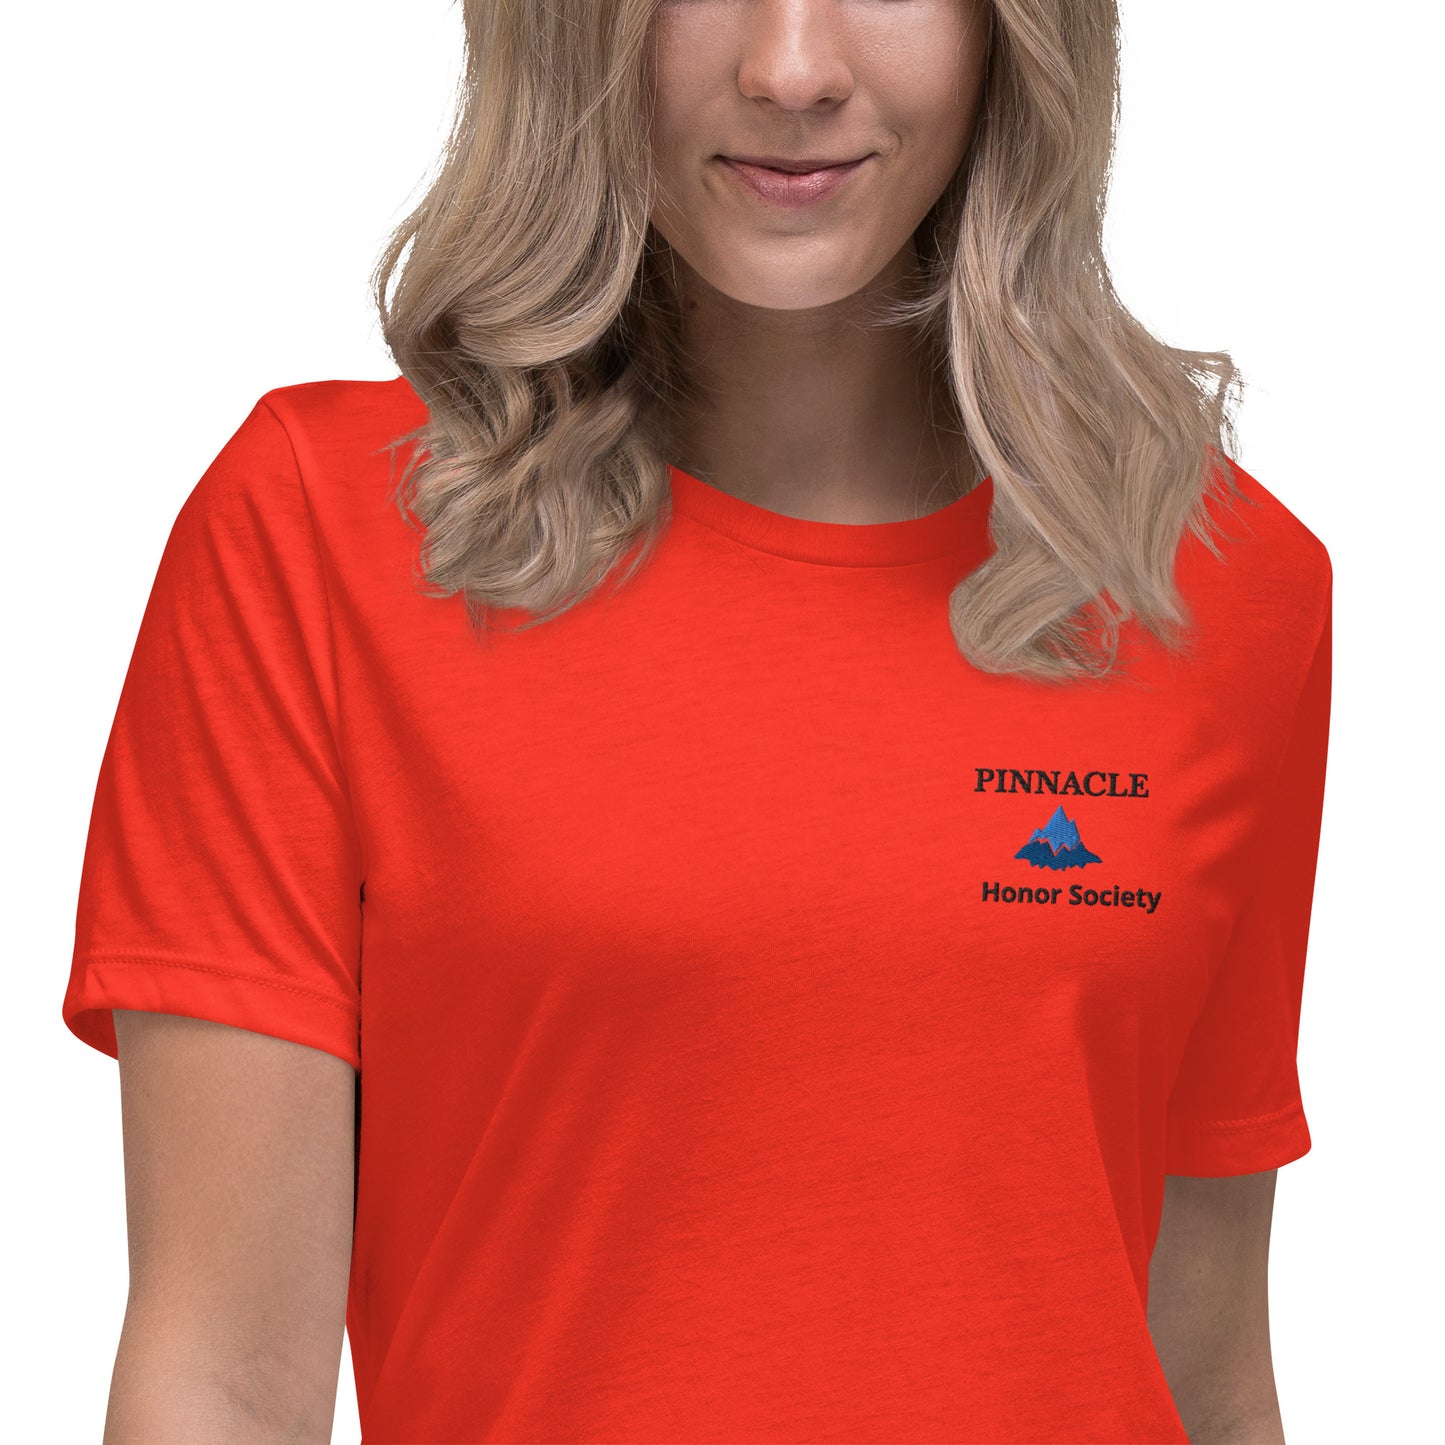 Pinnacle Honor Society Women's Relaxed T-Shirt